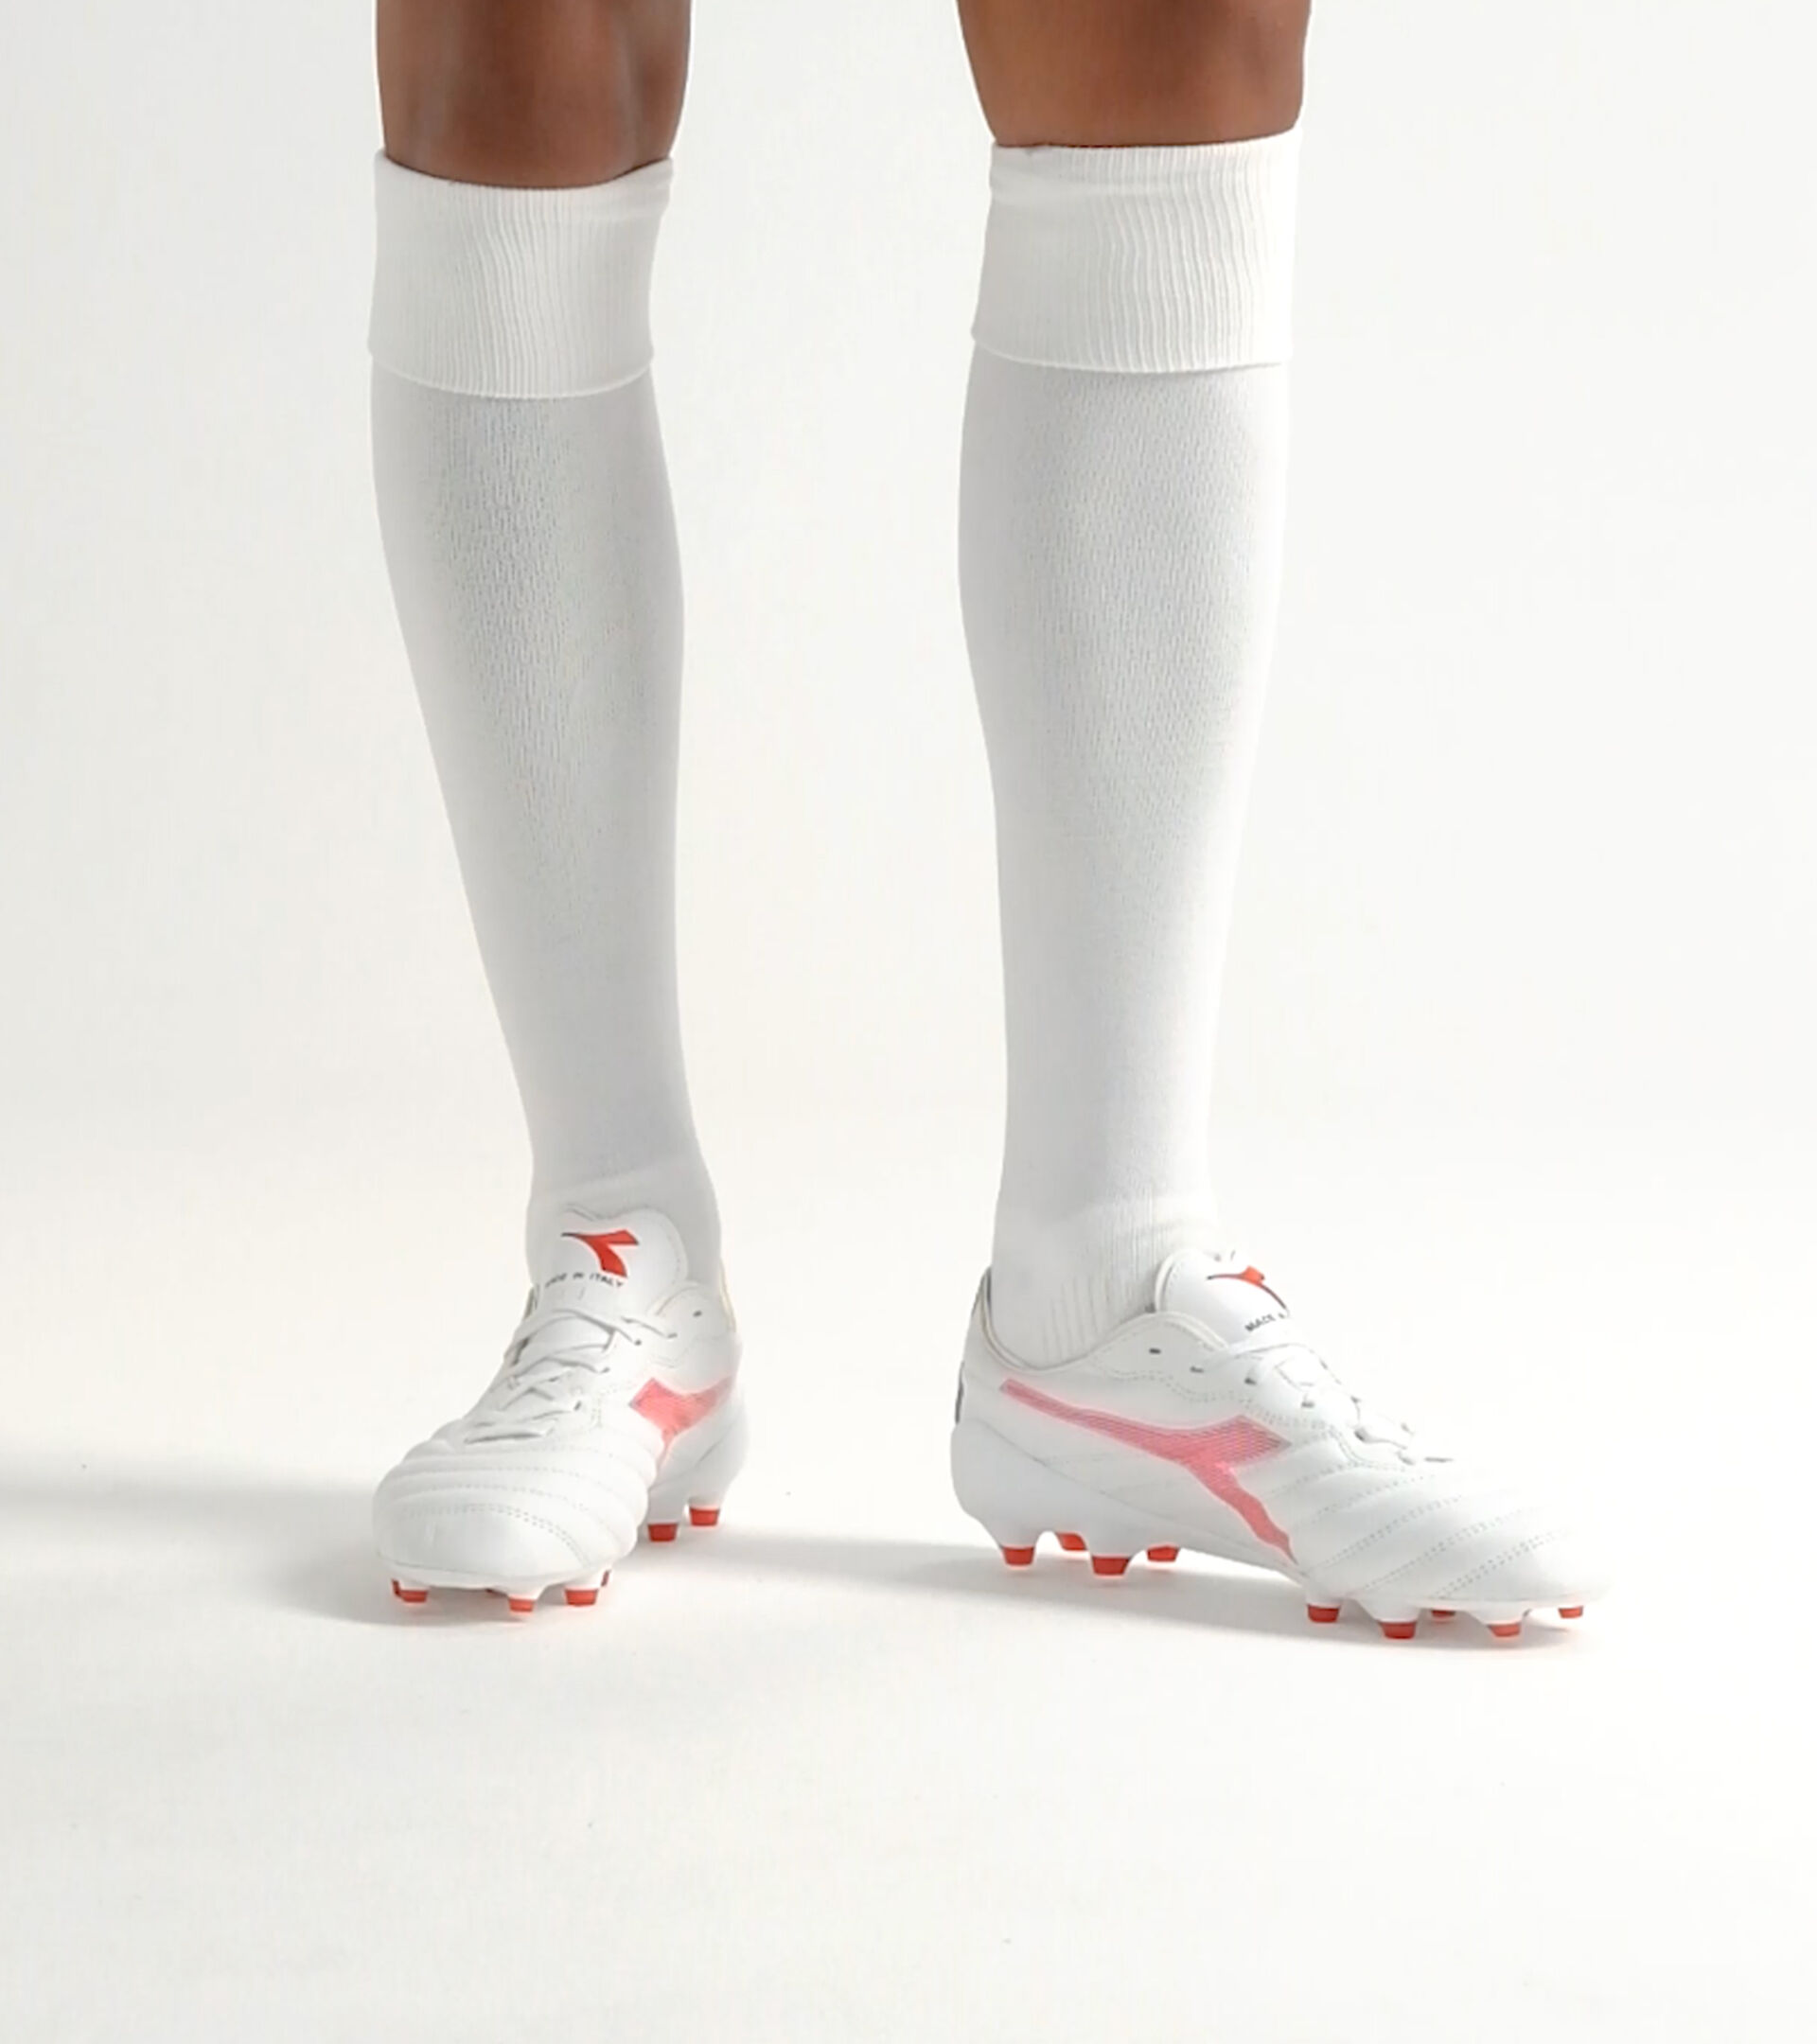 Firm ground and synthetic pitches football boots - Men’s BRASIL ELITE2 TECH ITA LPX WHITE/MILANO RED - Diadora